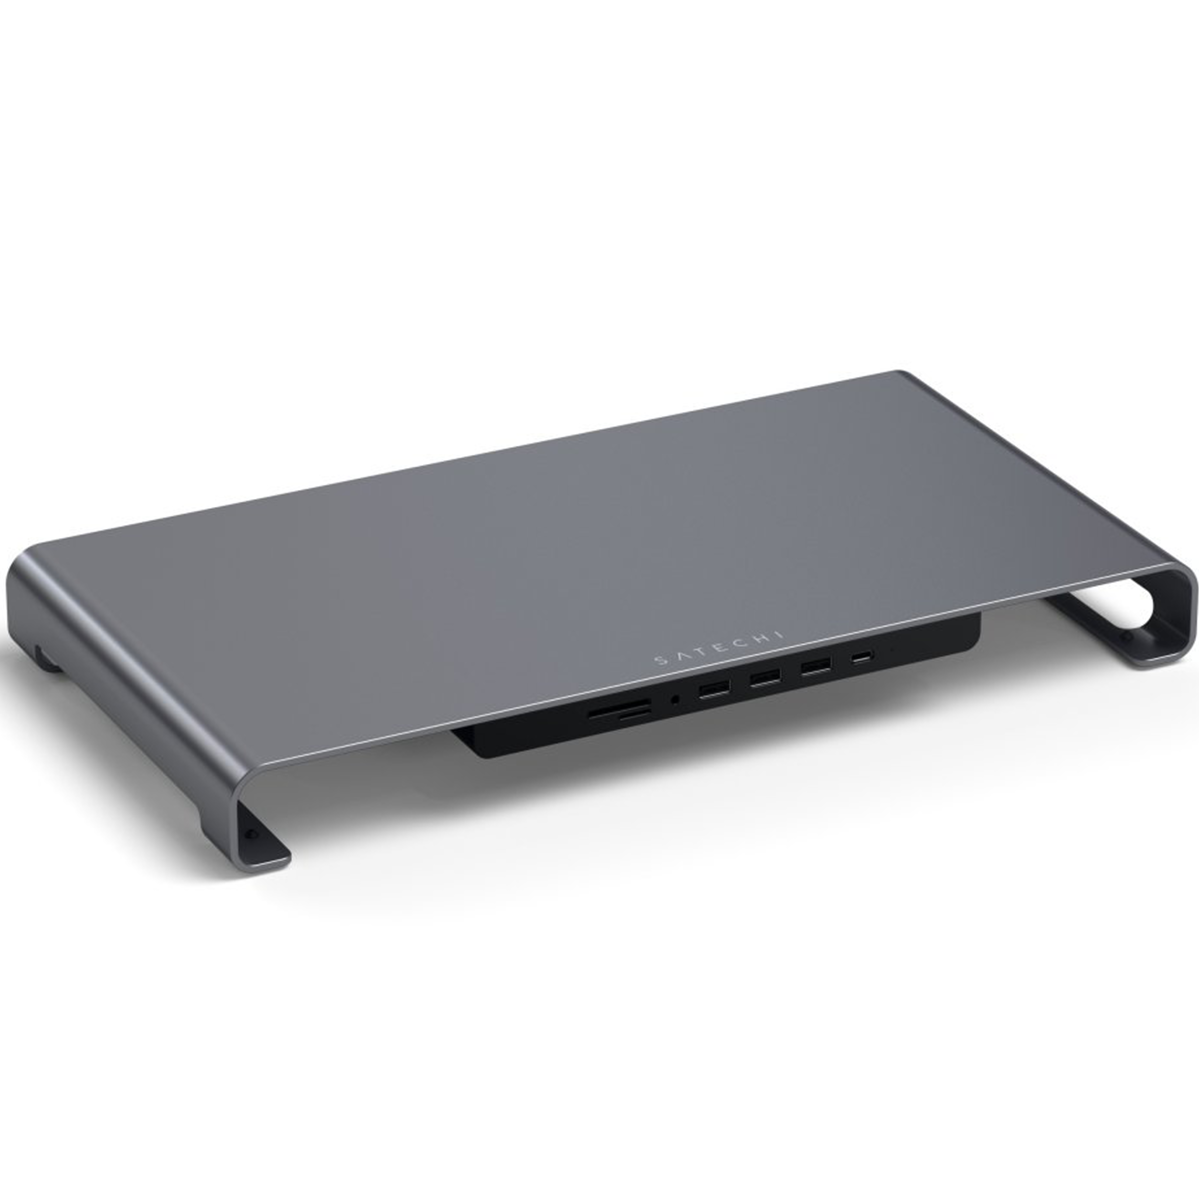 Підставка для iMac чи монітора‌ Satechi Aluminum USB-C Monitor Stand Hub XL - Space Gray (ST-UCSHXLM)